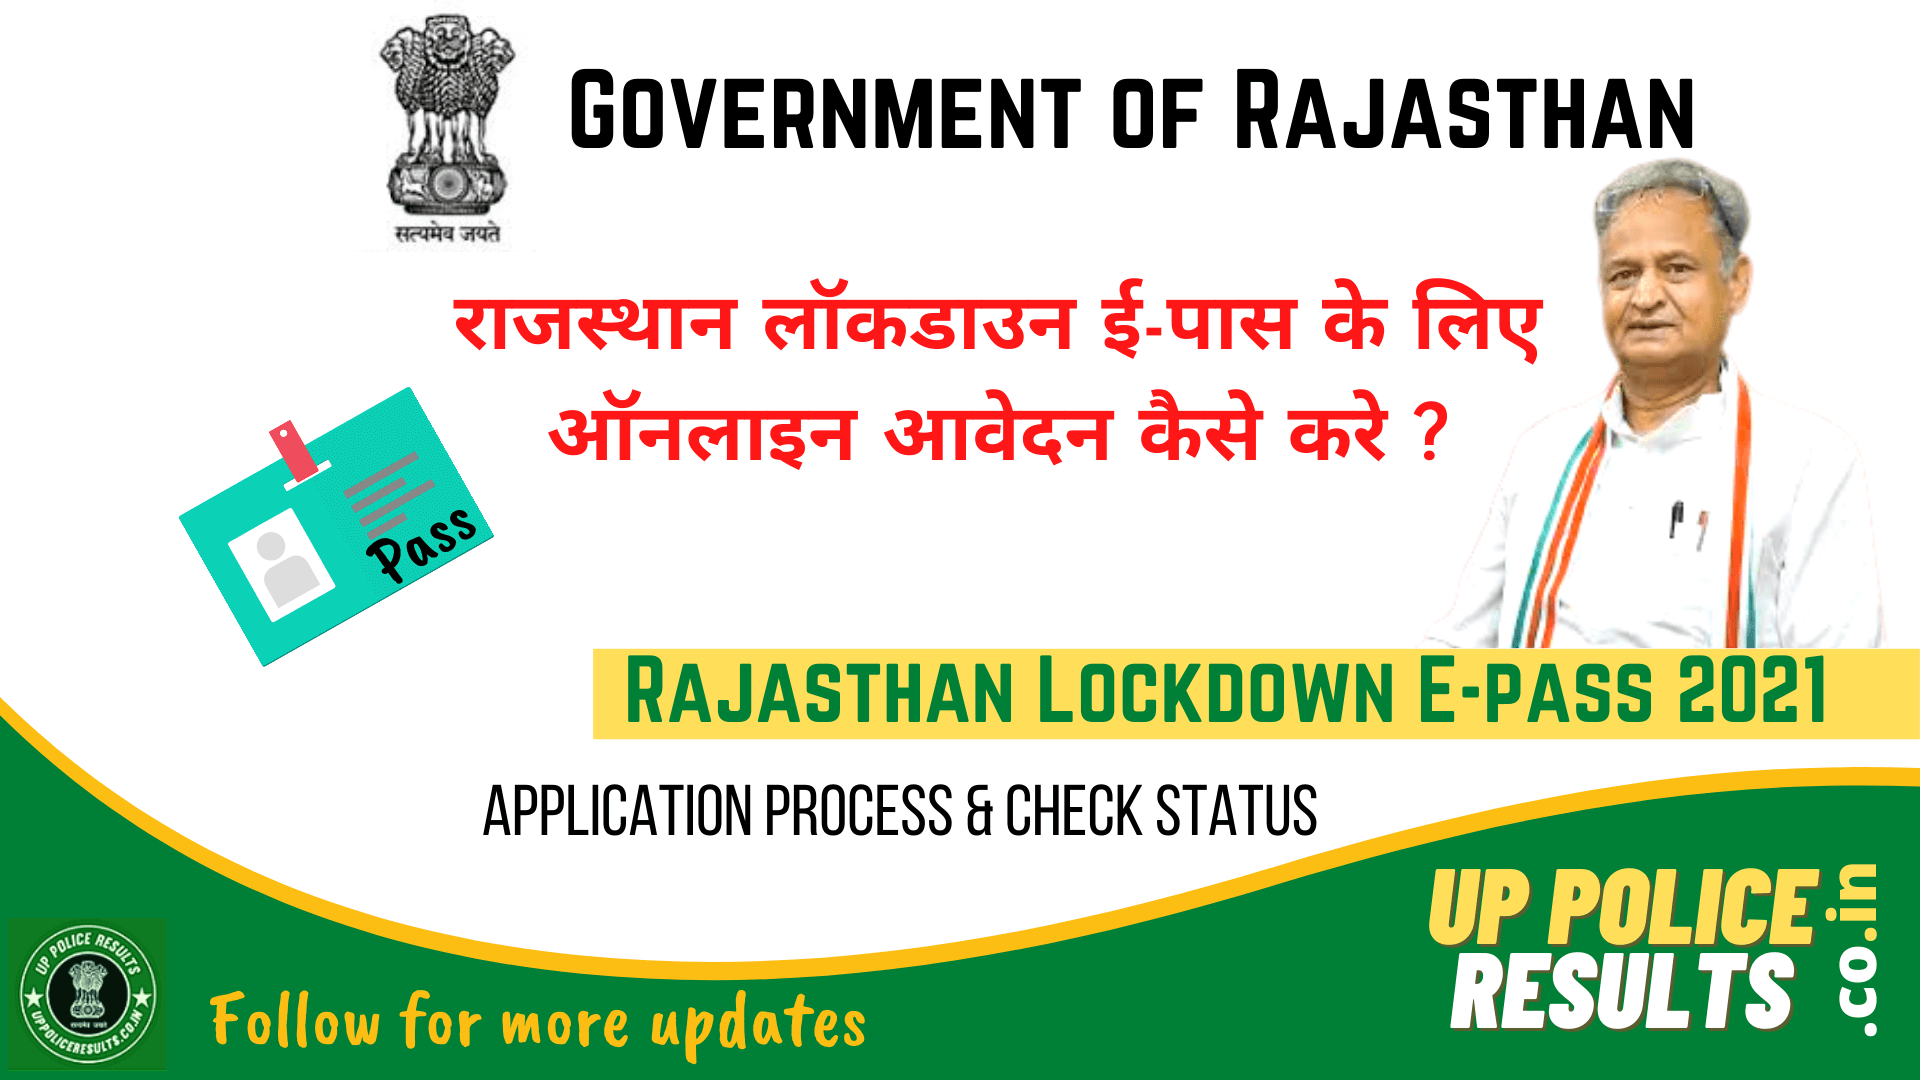 Rajasthan Lockdown E-pass